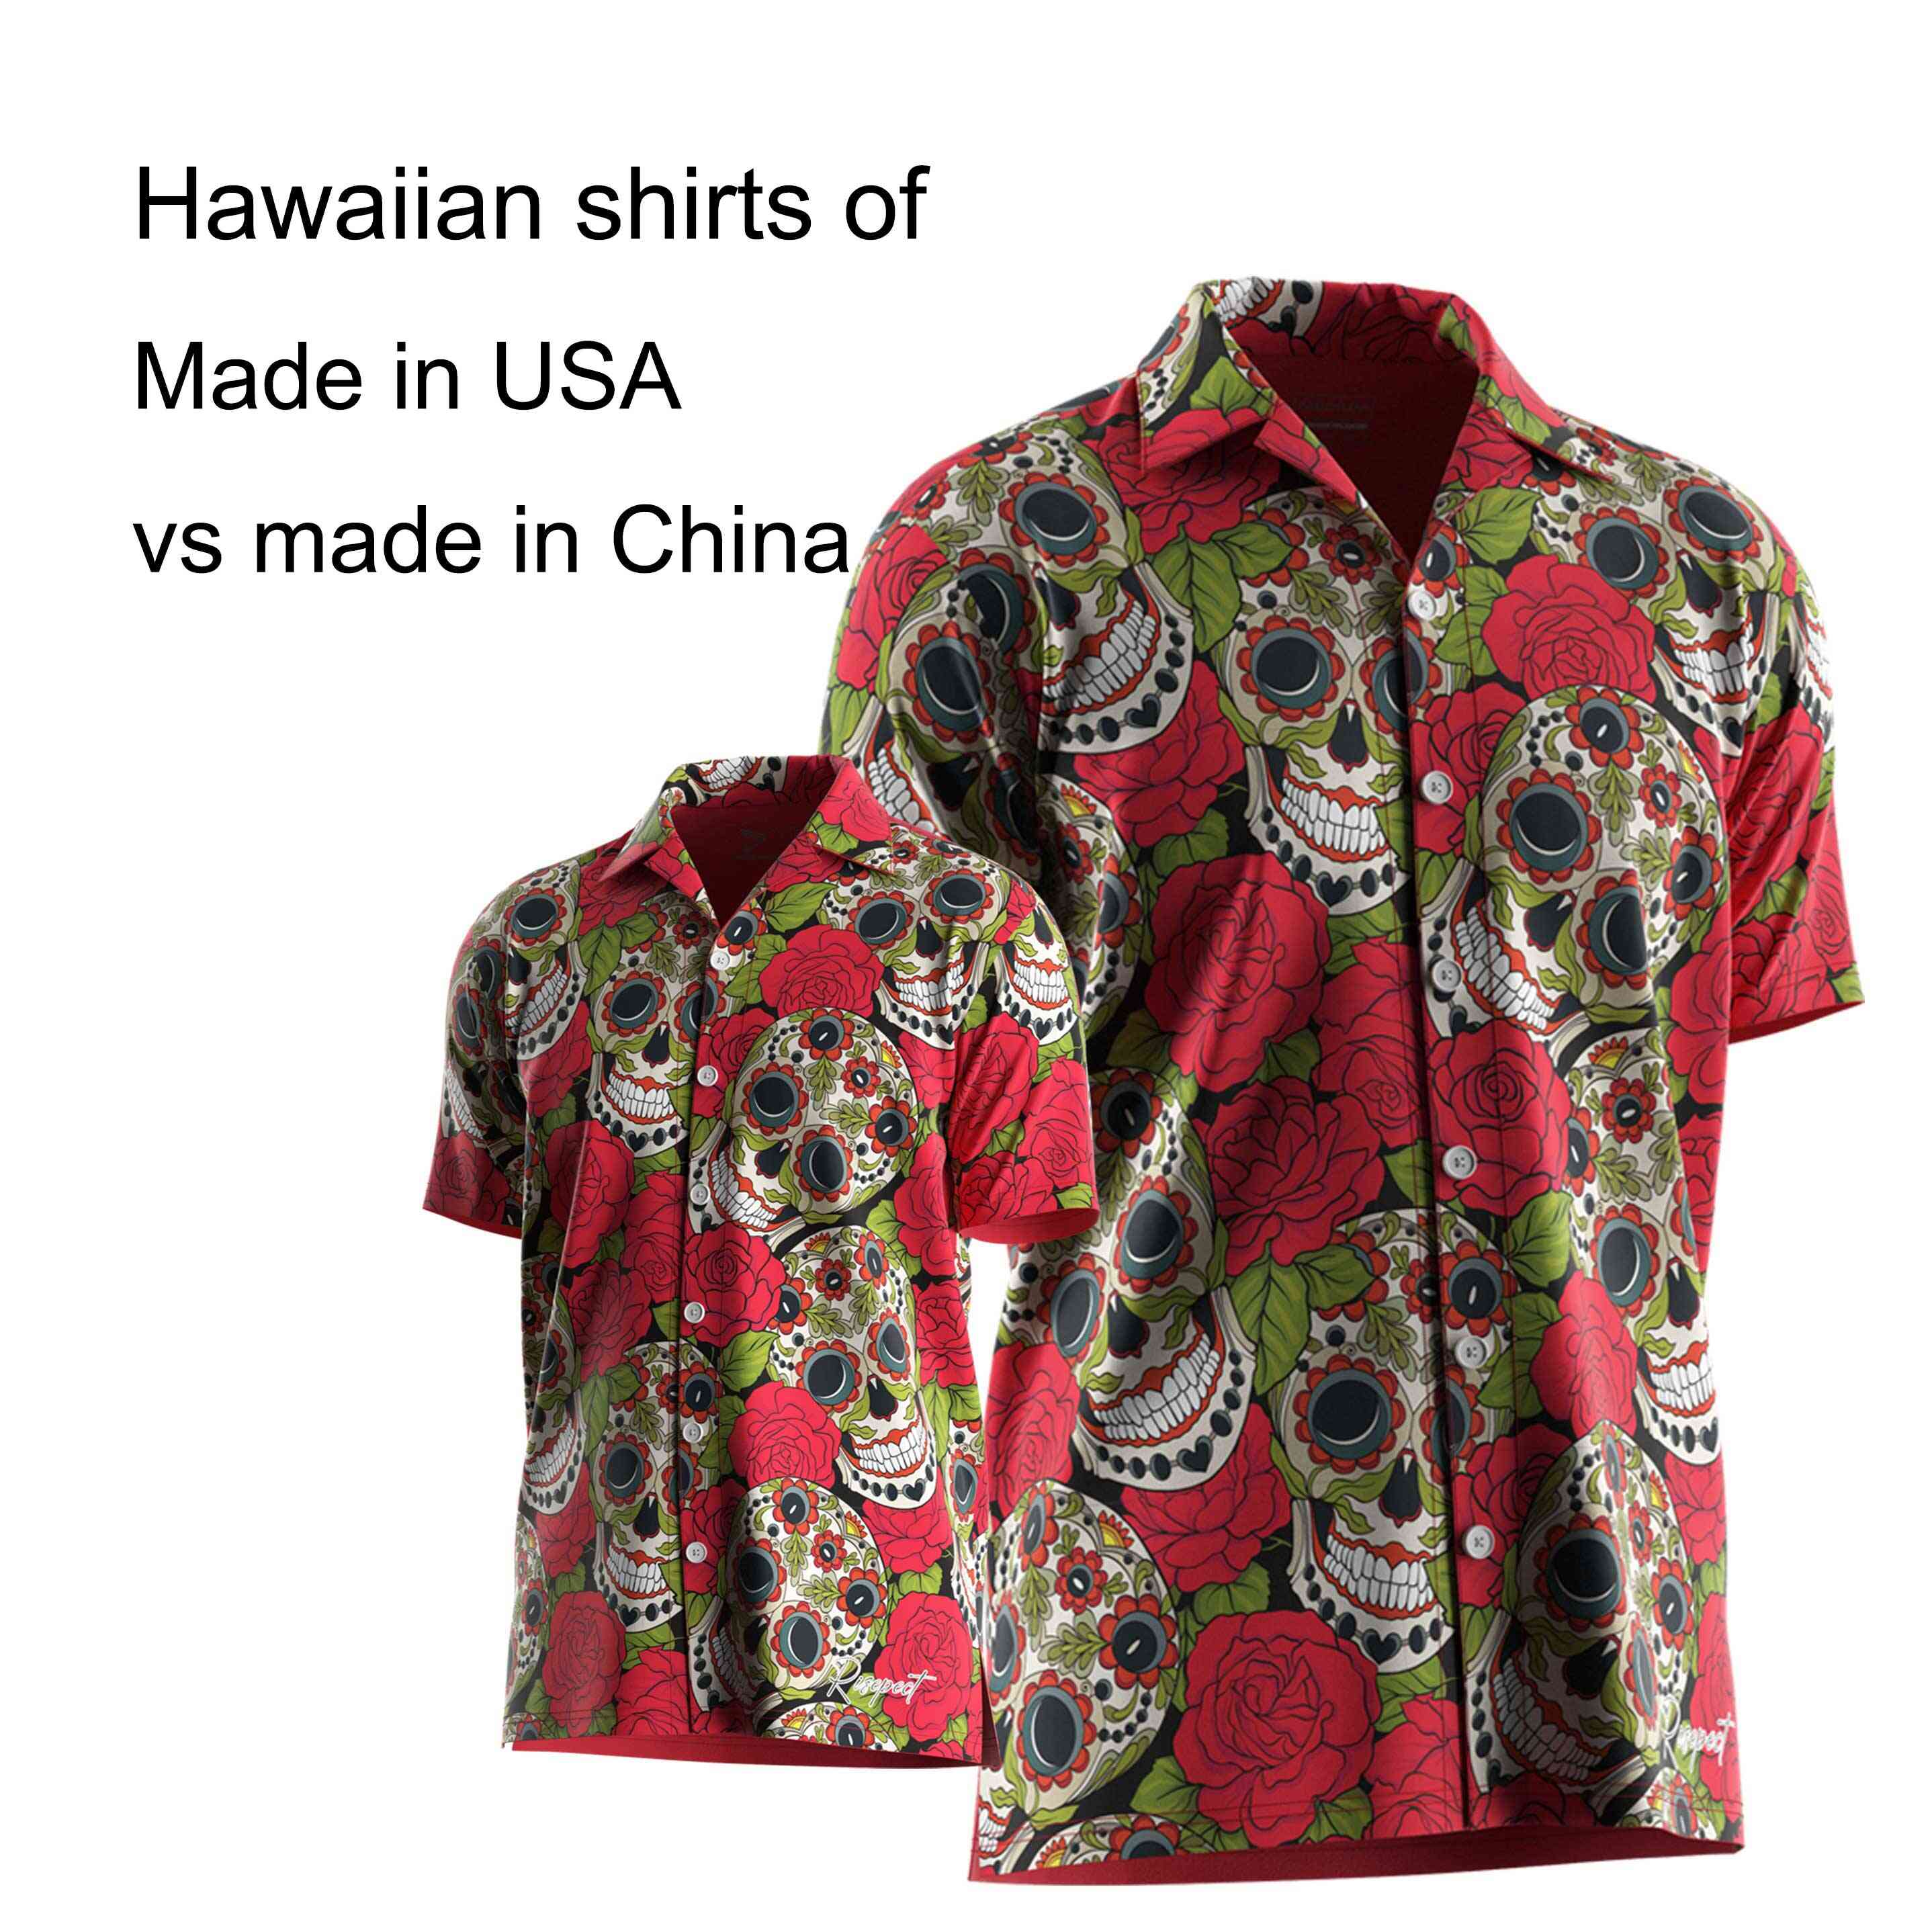 
                Rise Polo Hawaiian Shirt, made in the USA vs China made